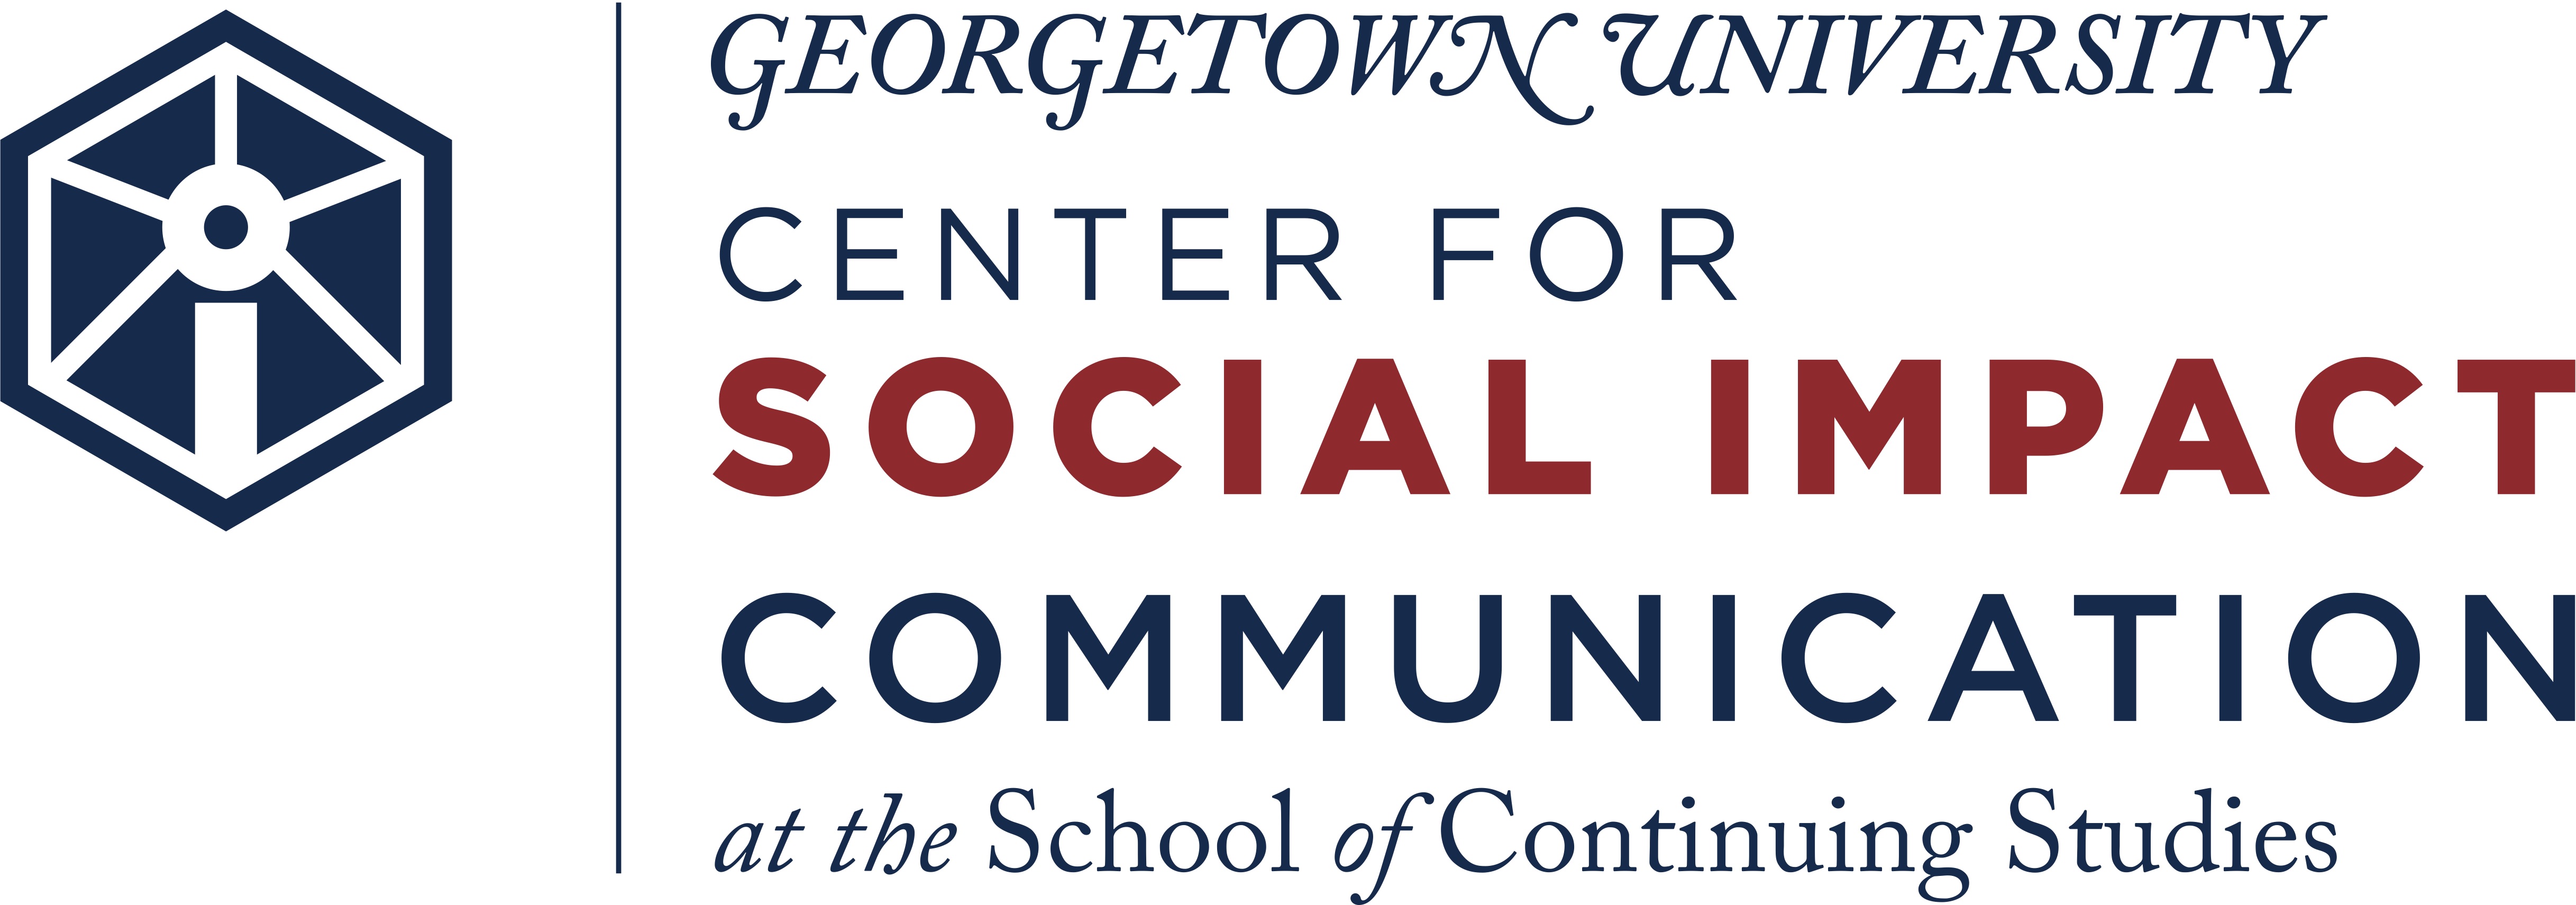 Center for Social Impact Communication - Georgetown University